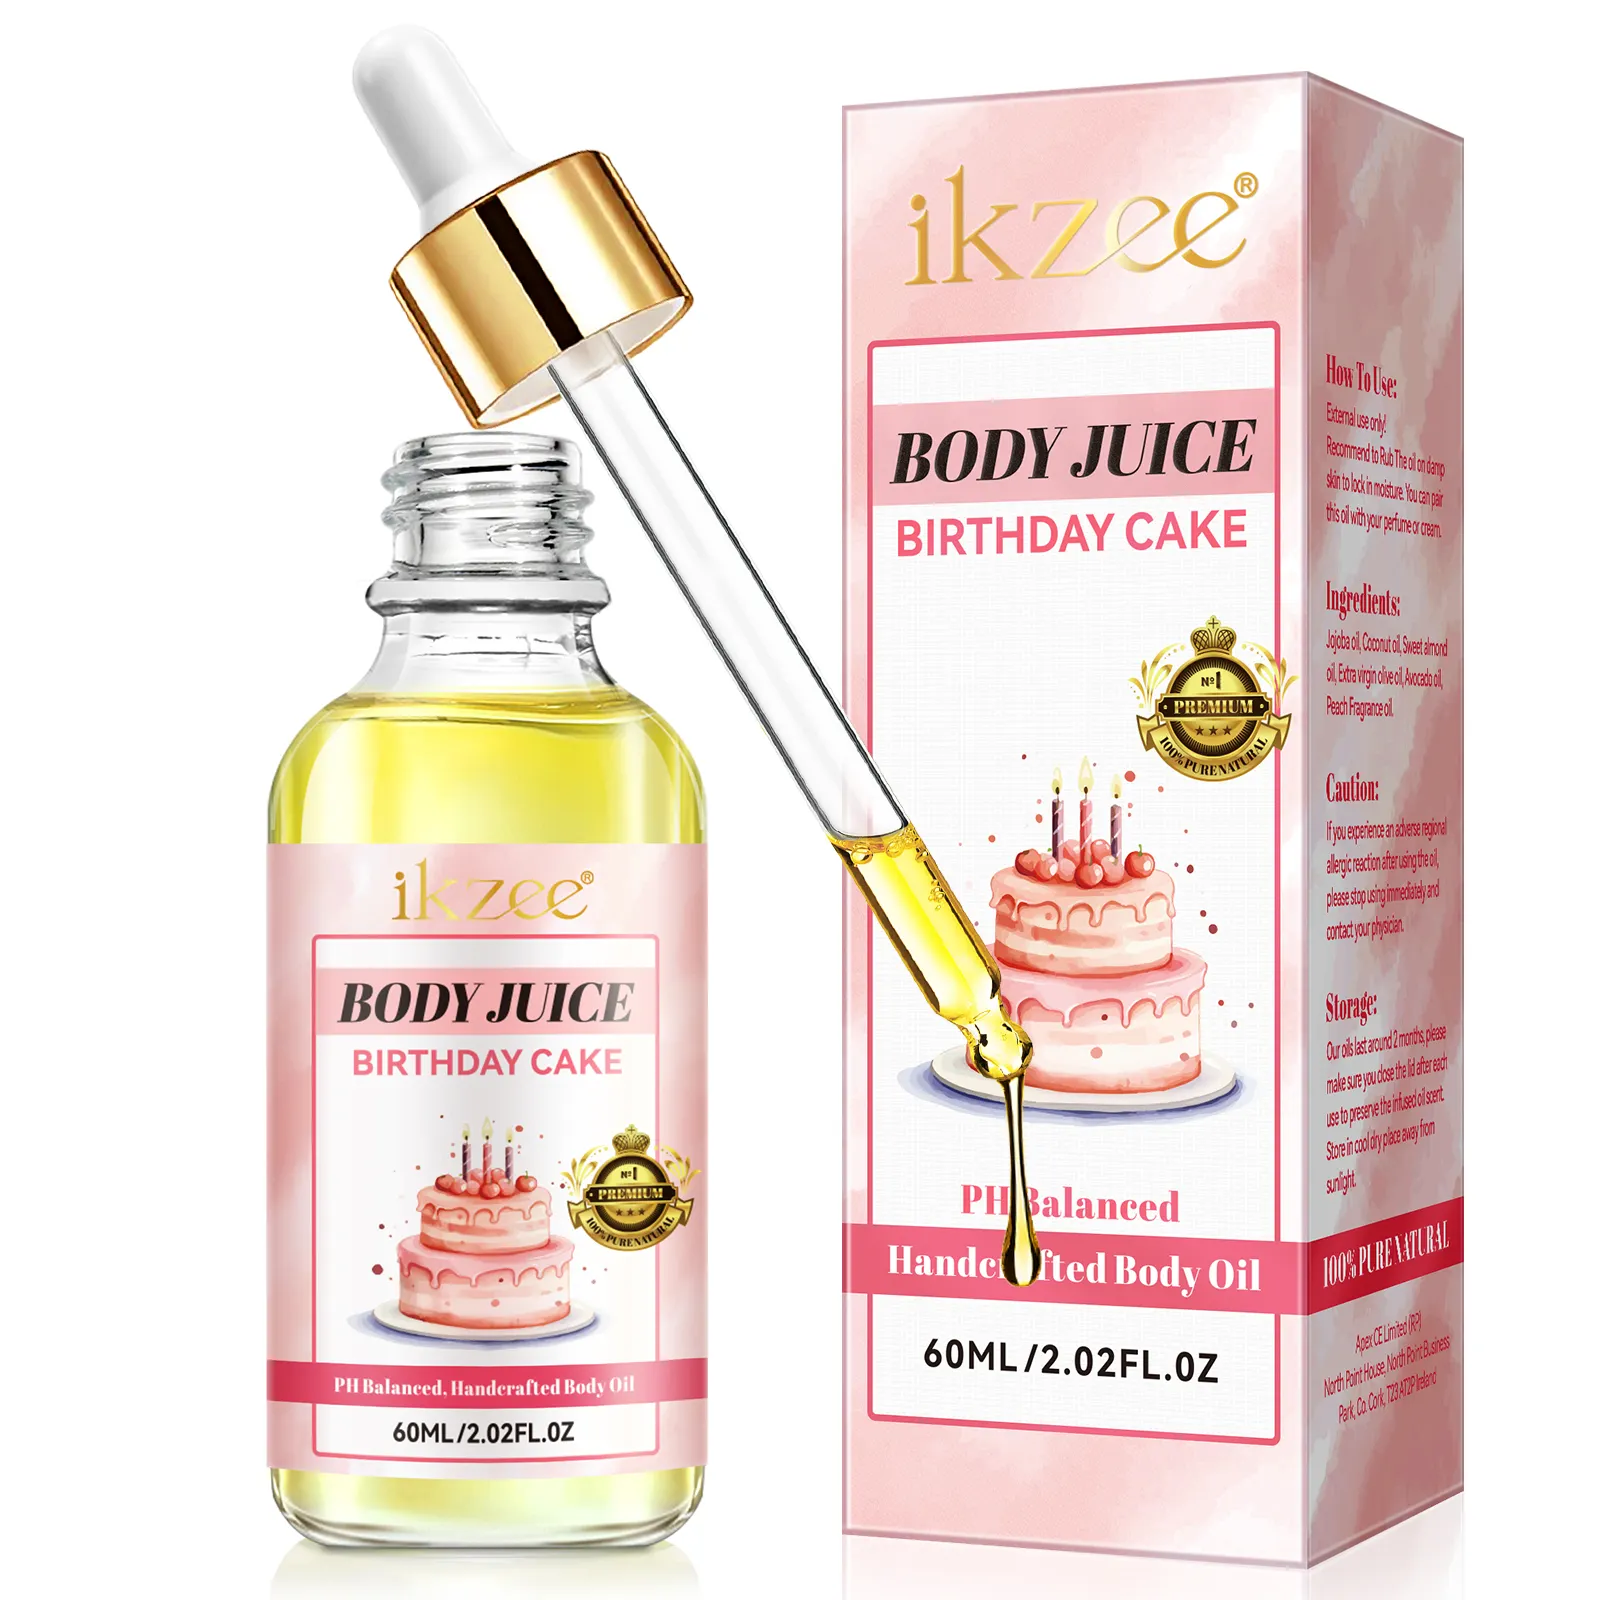 IKZEE birthday cake anti aging 60ml custom body organic essential oils wholesale,perfume fragrances scented body juice oil